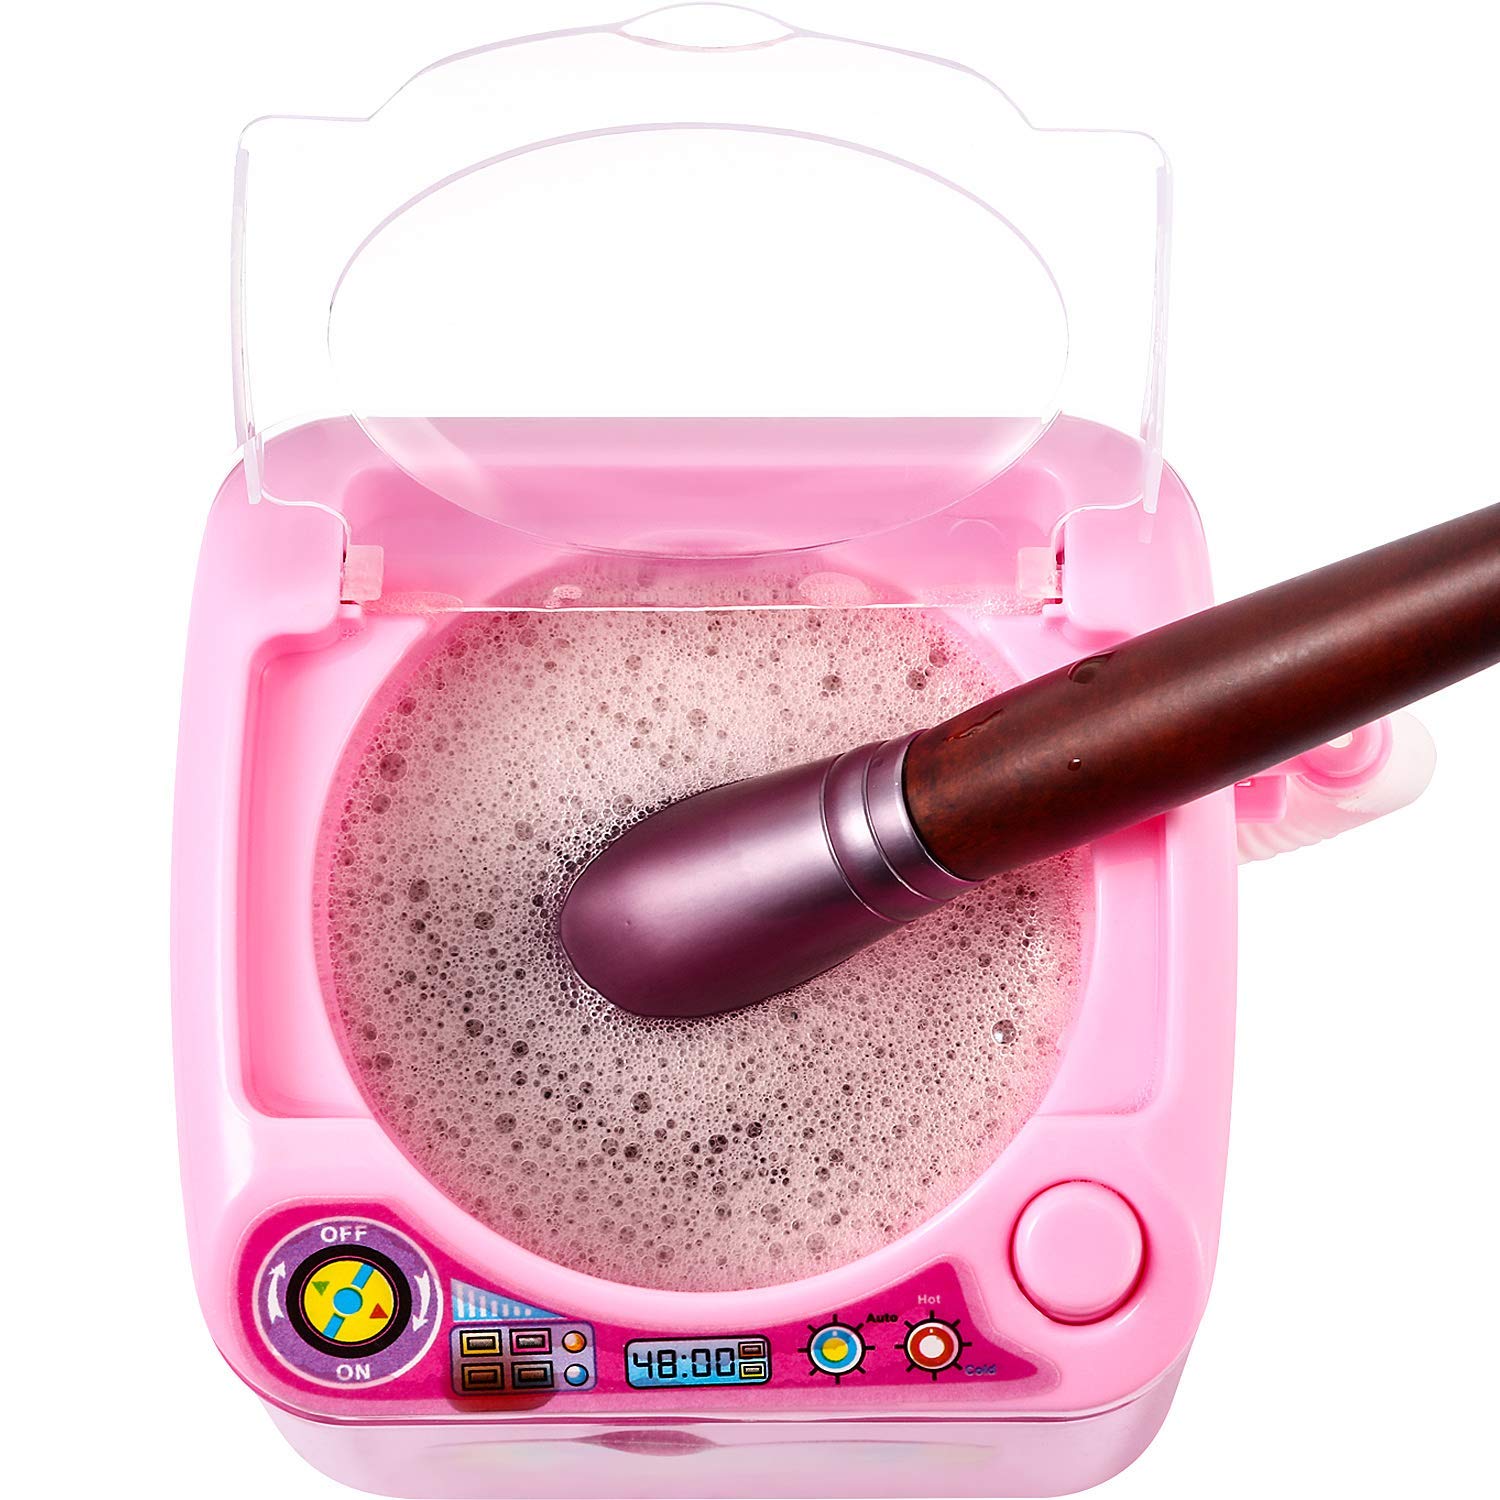 Automatic Washing Machine Sponge Cleaning - One free beauty egg